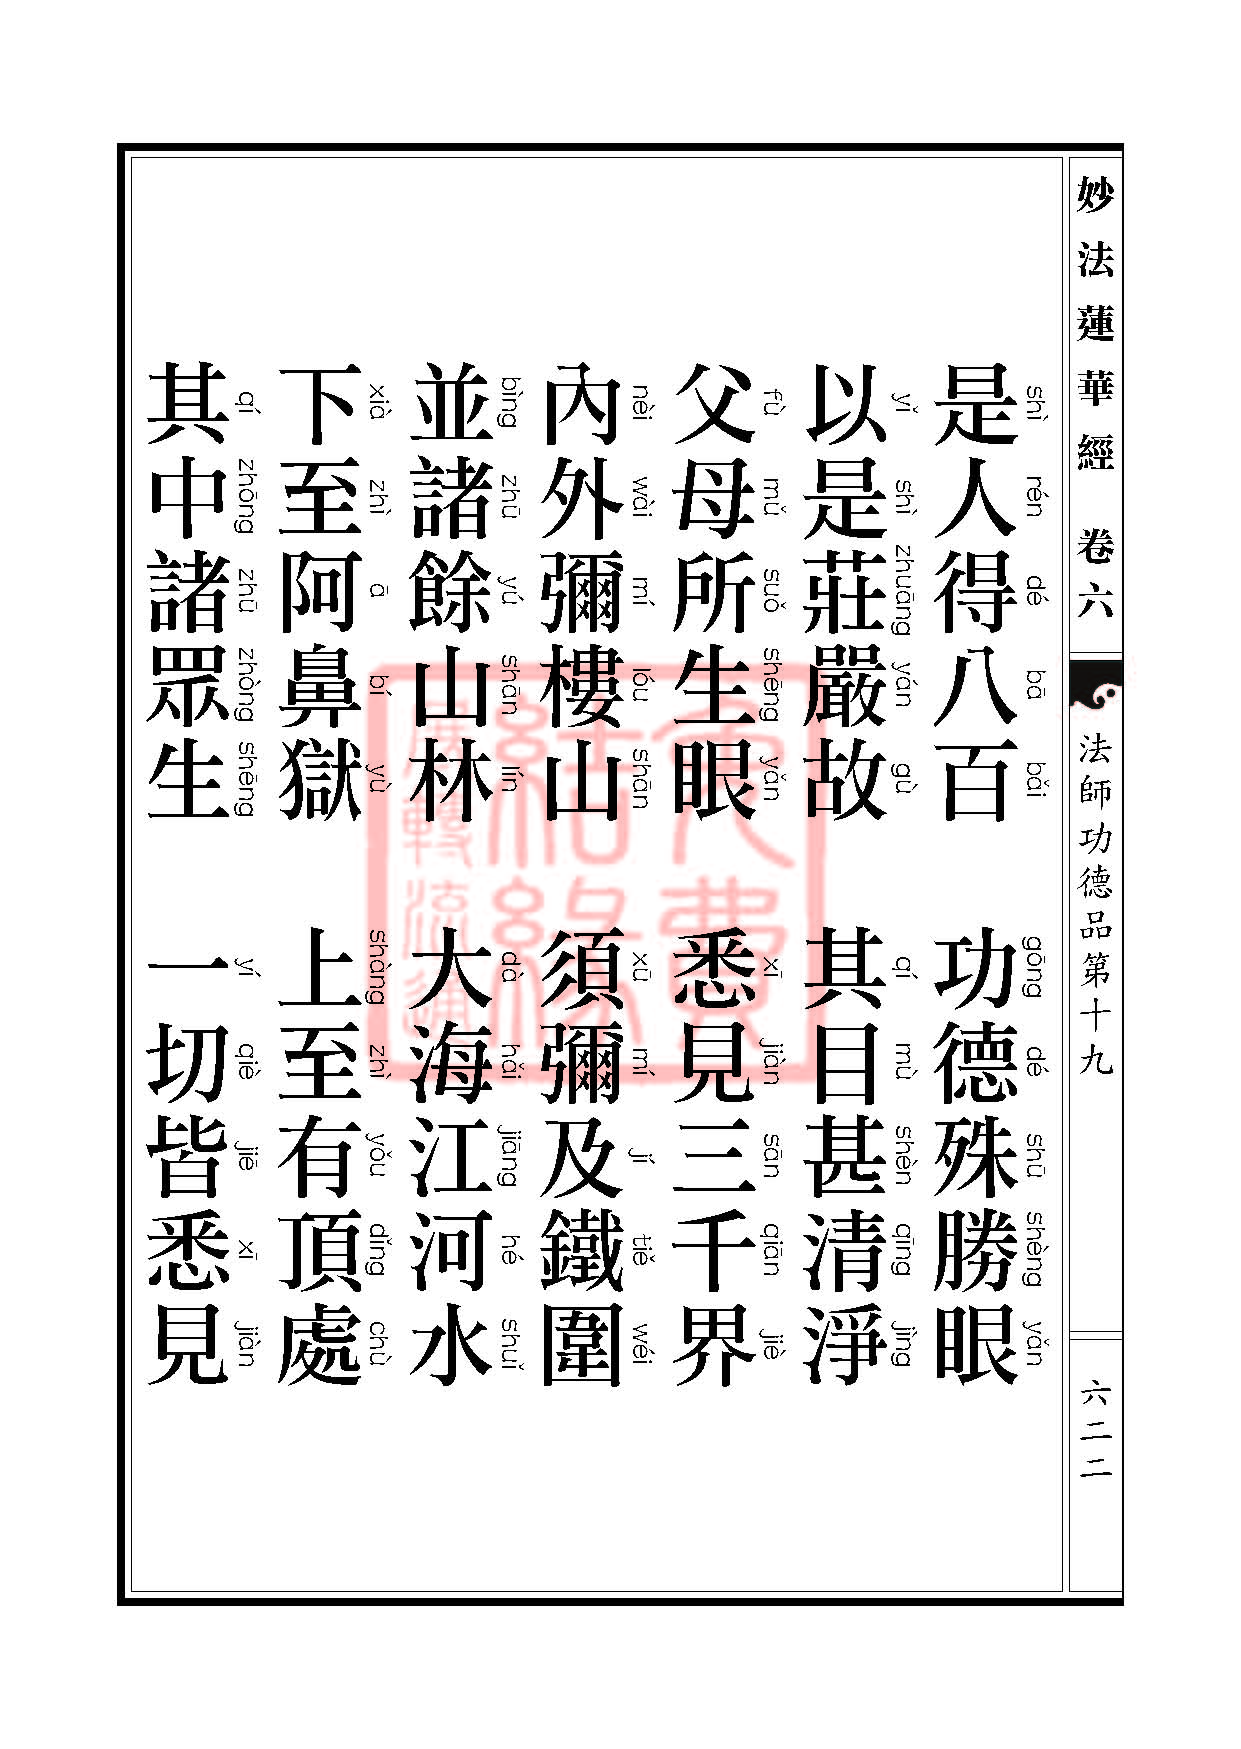 Book_FHJ_HK-A6-PY_Web_页面_622.jpg